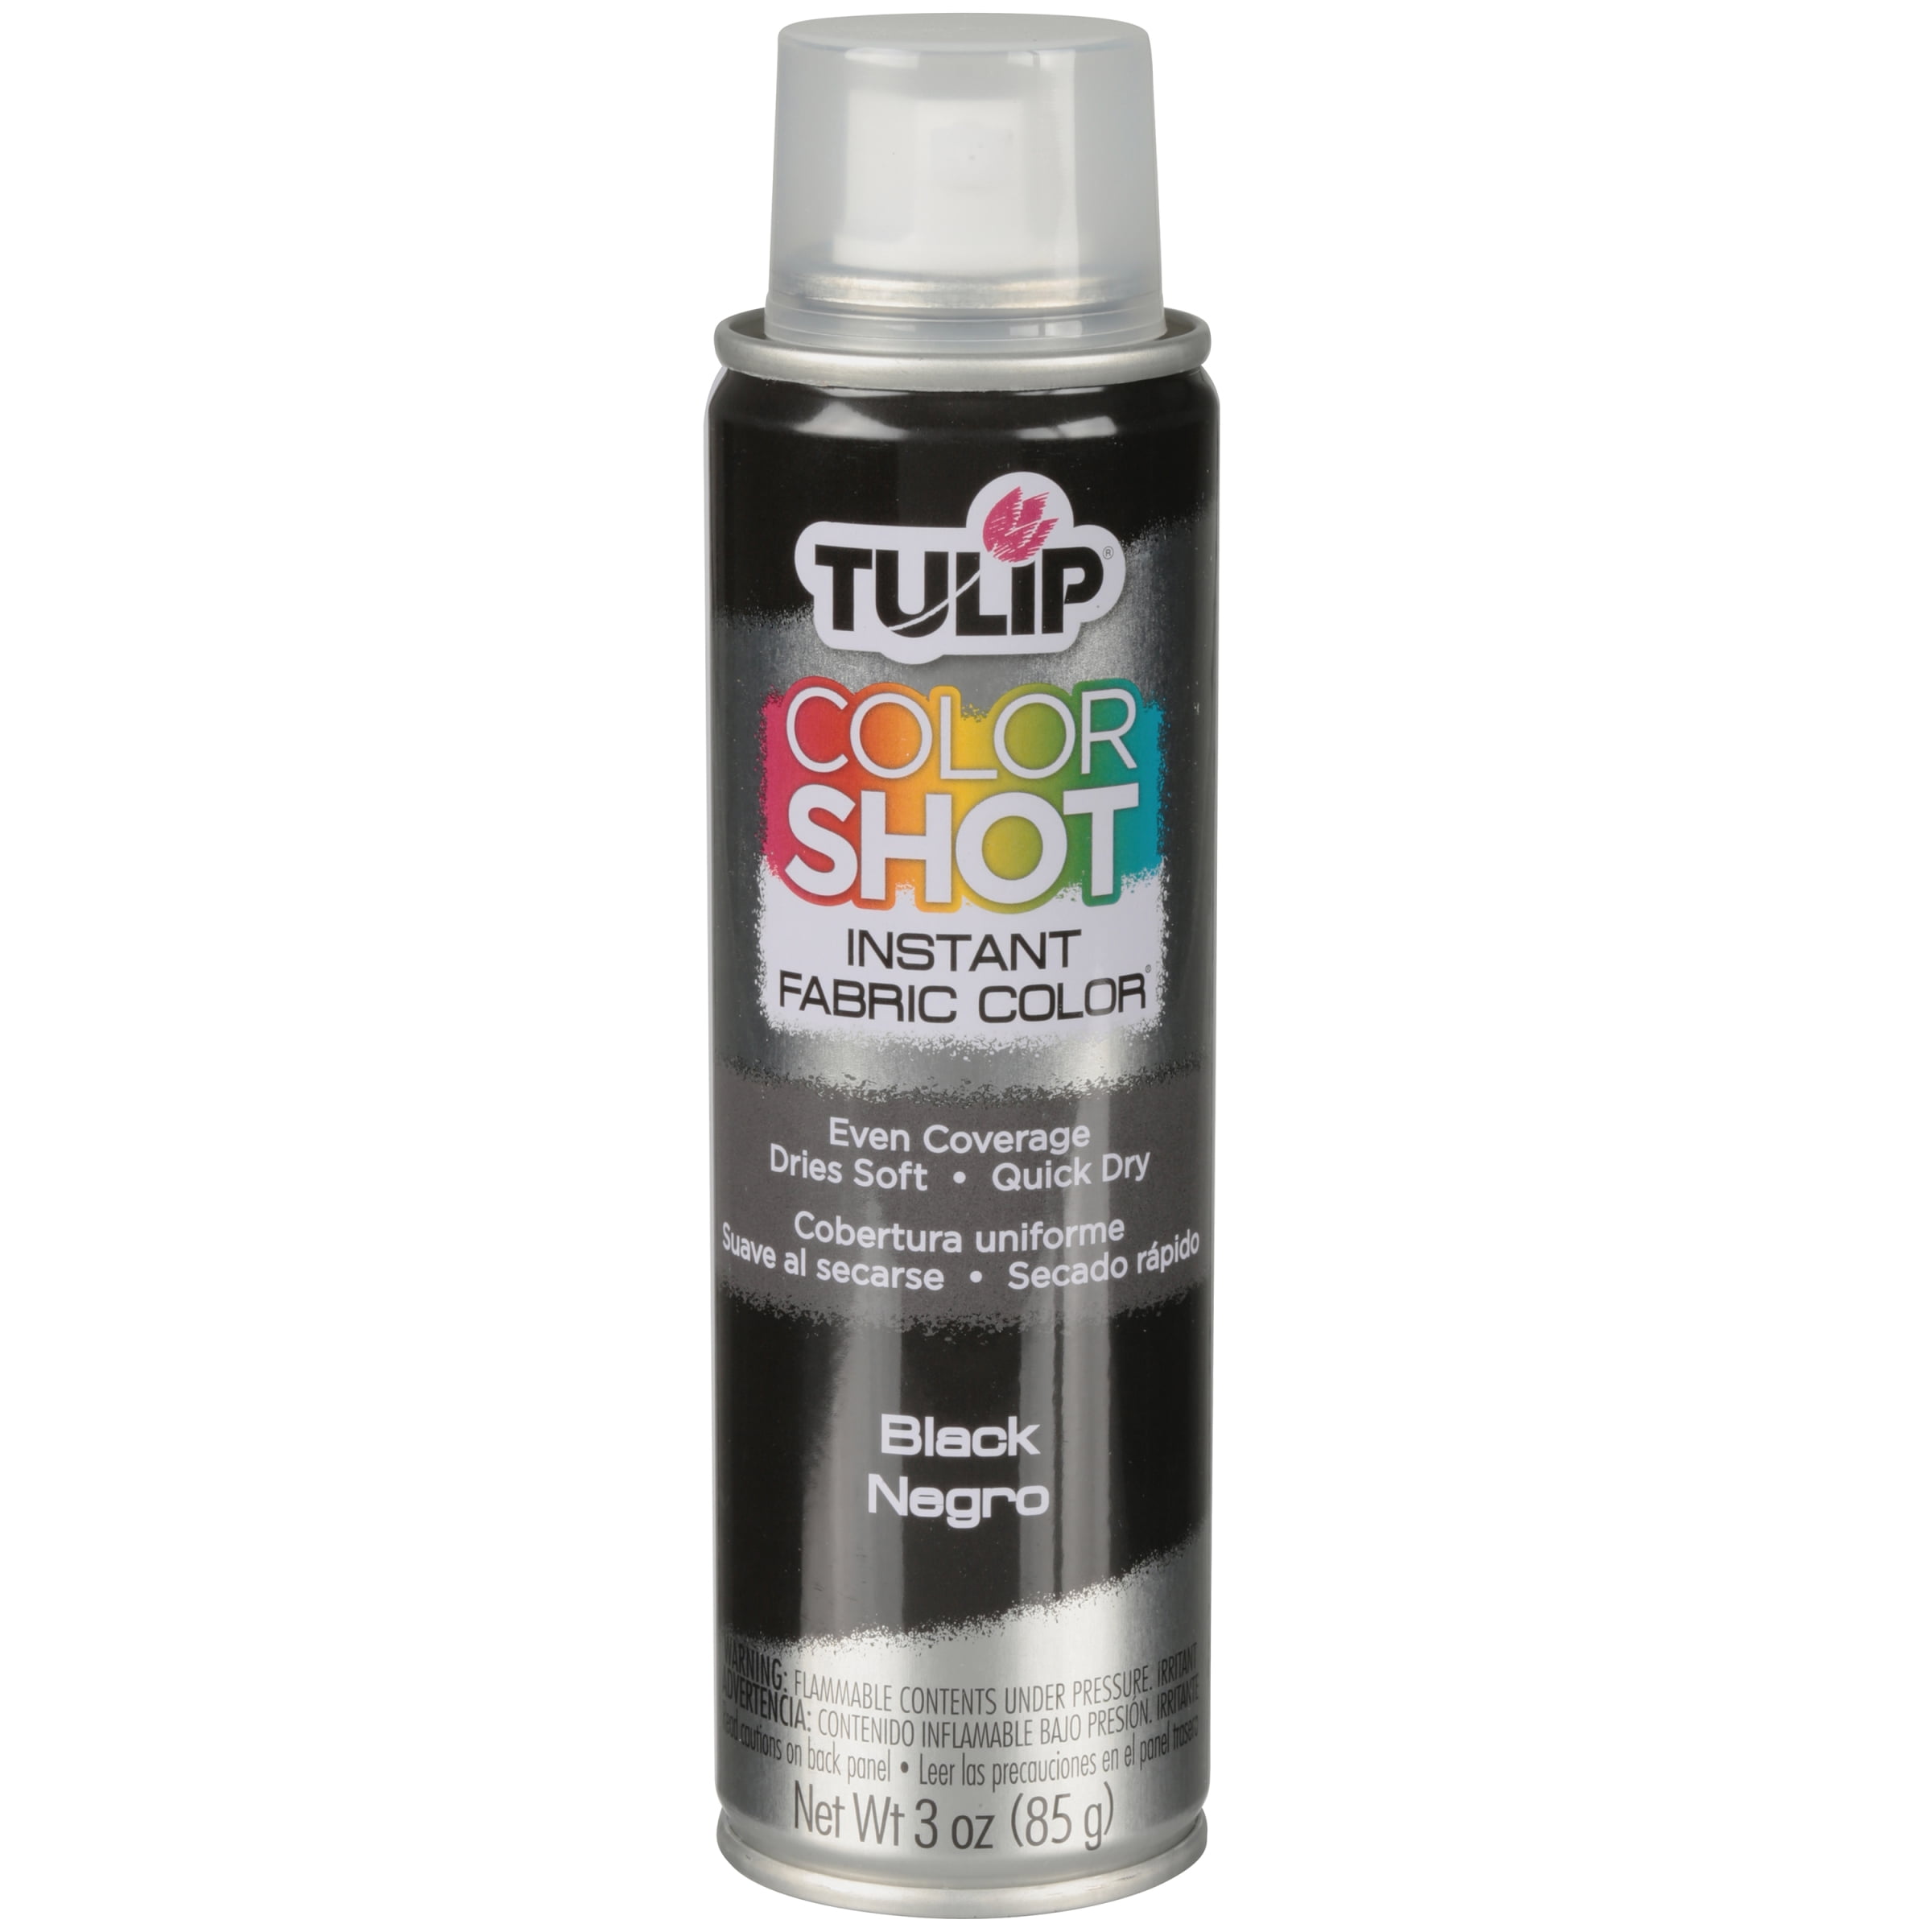 Tulip Color Shot Instant Fabric Color Spray 3 oz Black, Quick Dry 